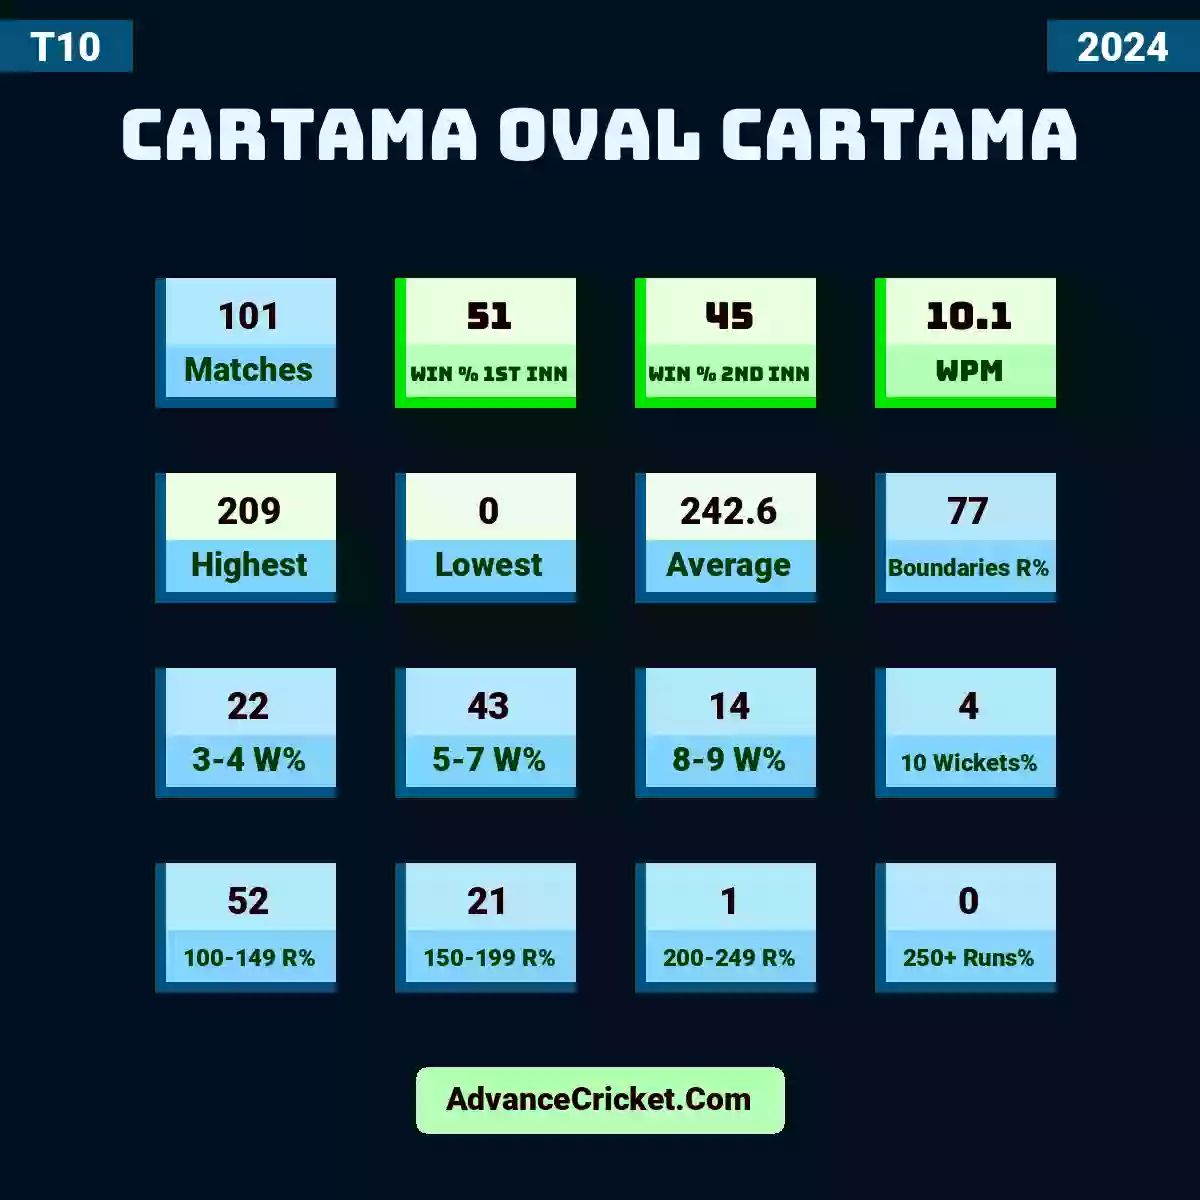 Image showing Cartama Oval Cartama with Matches: 101, Win % 1st Inn: 51, Win % 2nd Inn: 45, WPM: 10.1, Highest: 209, Lowest: 0, Average: 242.6, Boundaries R%: 77, 3-4 W%: 22, 5-7 W%: 43, 8-9 W%: 14, 10 Wickets%: 4, 100-149 R%: 52, 150-199 R%: 21, 200-249 R%: 1, 250+ Runs%: 0.